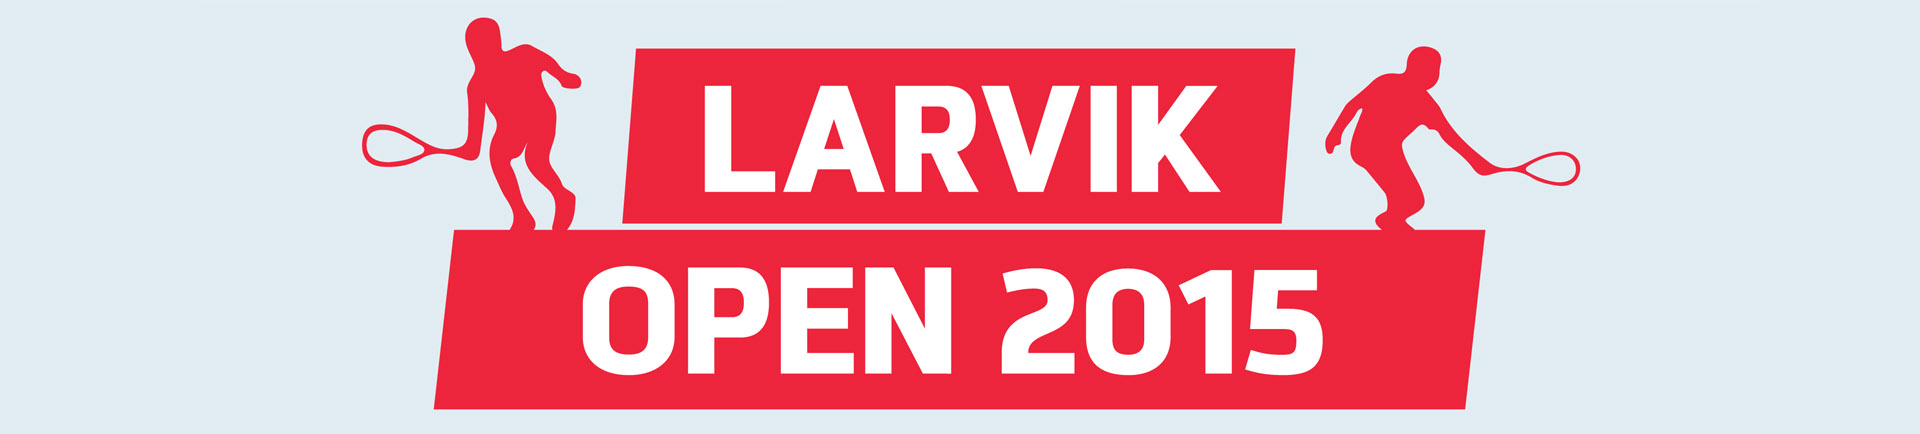 Larvik Open 2015